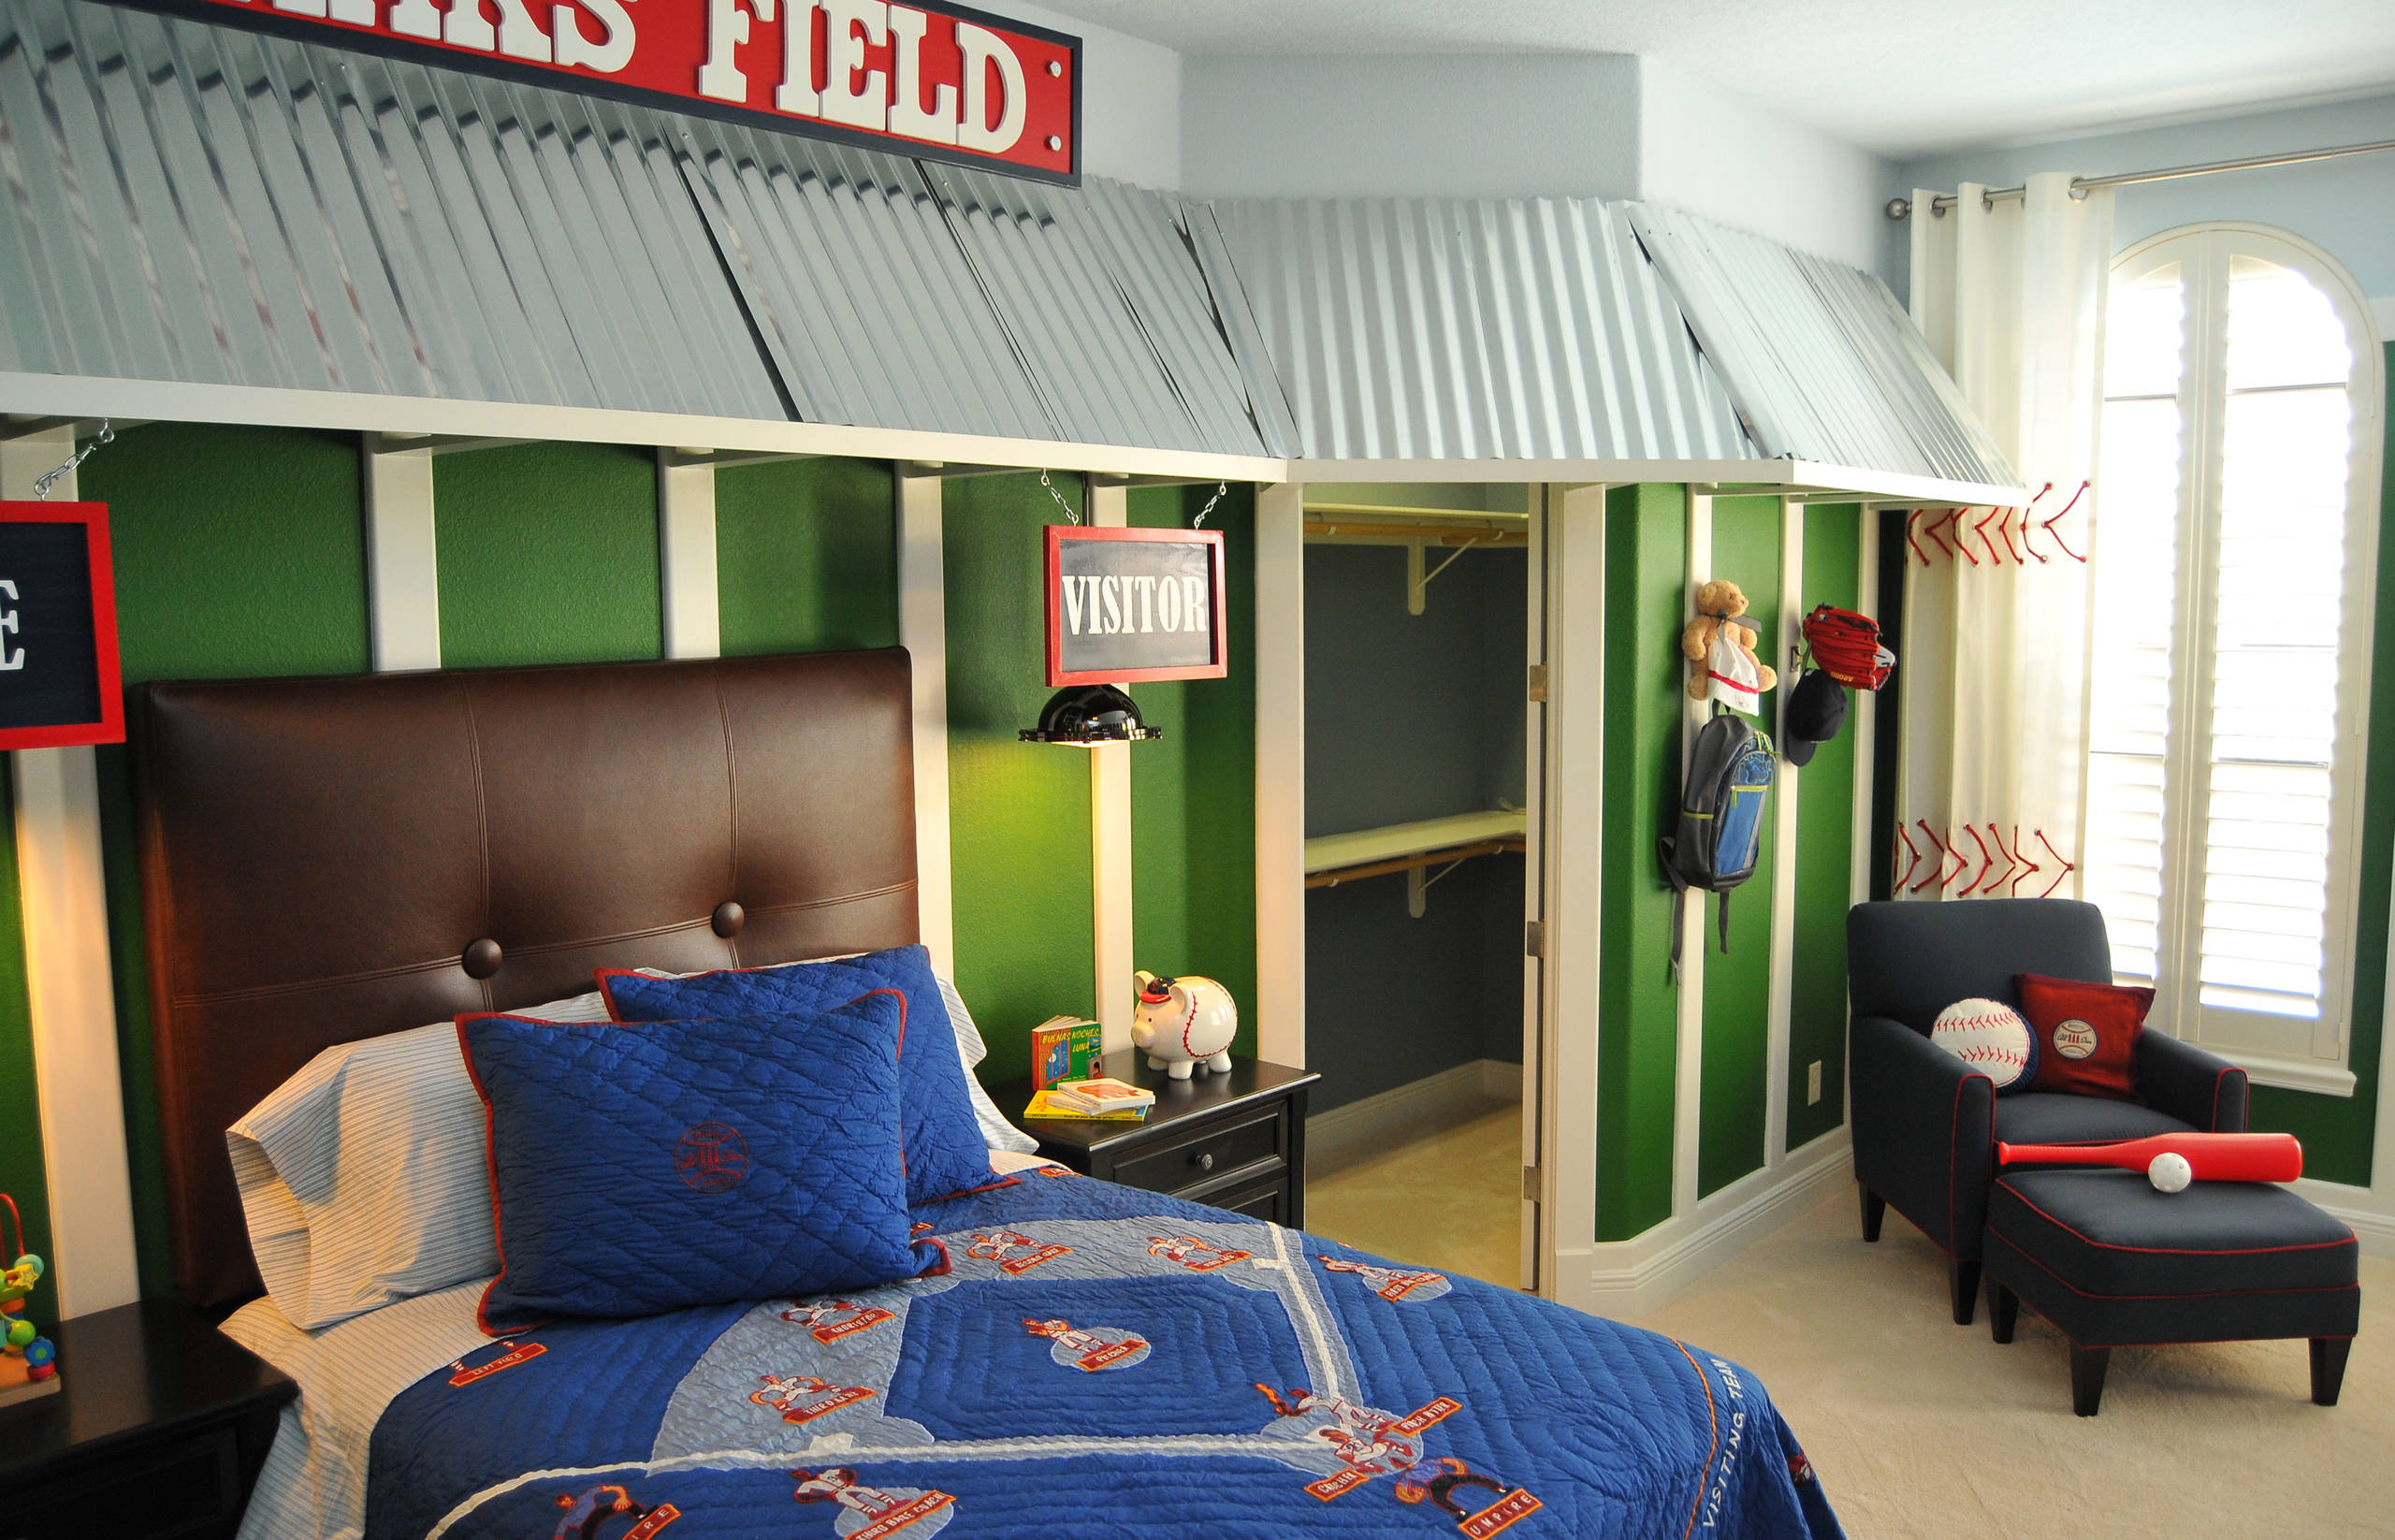 Baseball themed Rooms ideas. Teams rooms